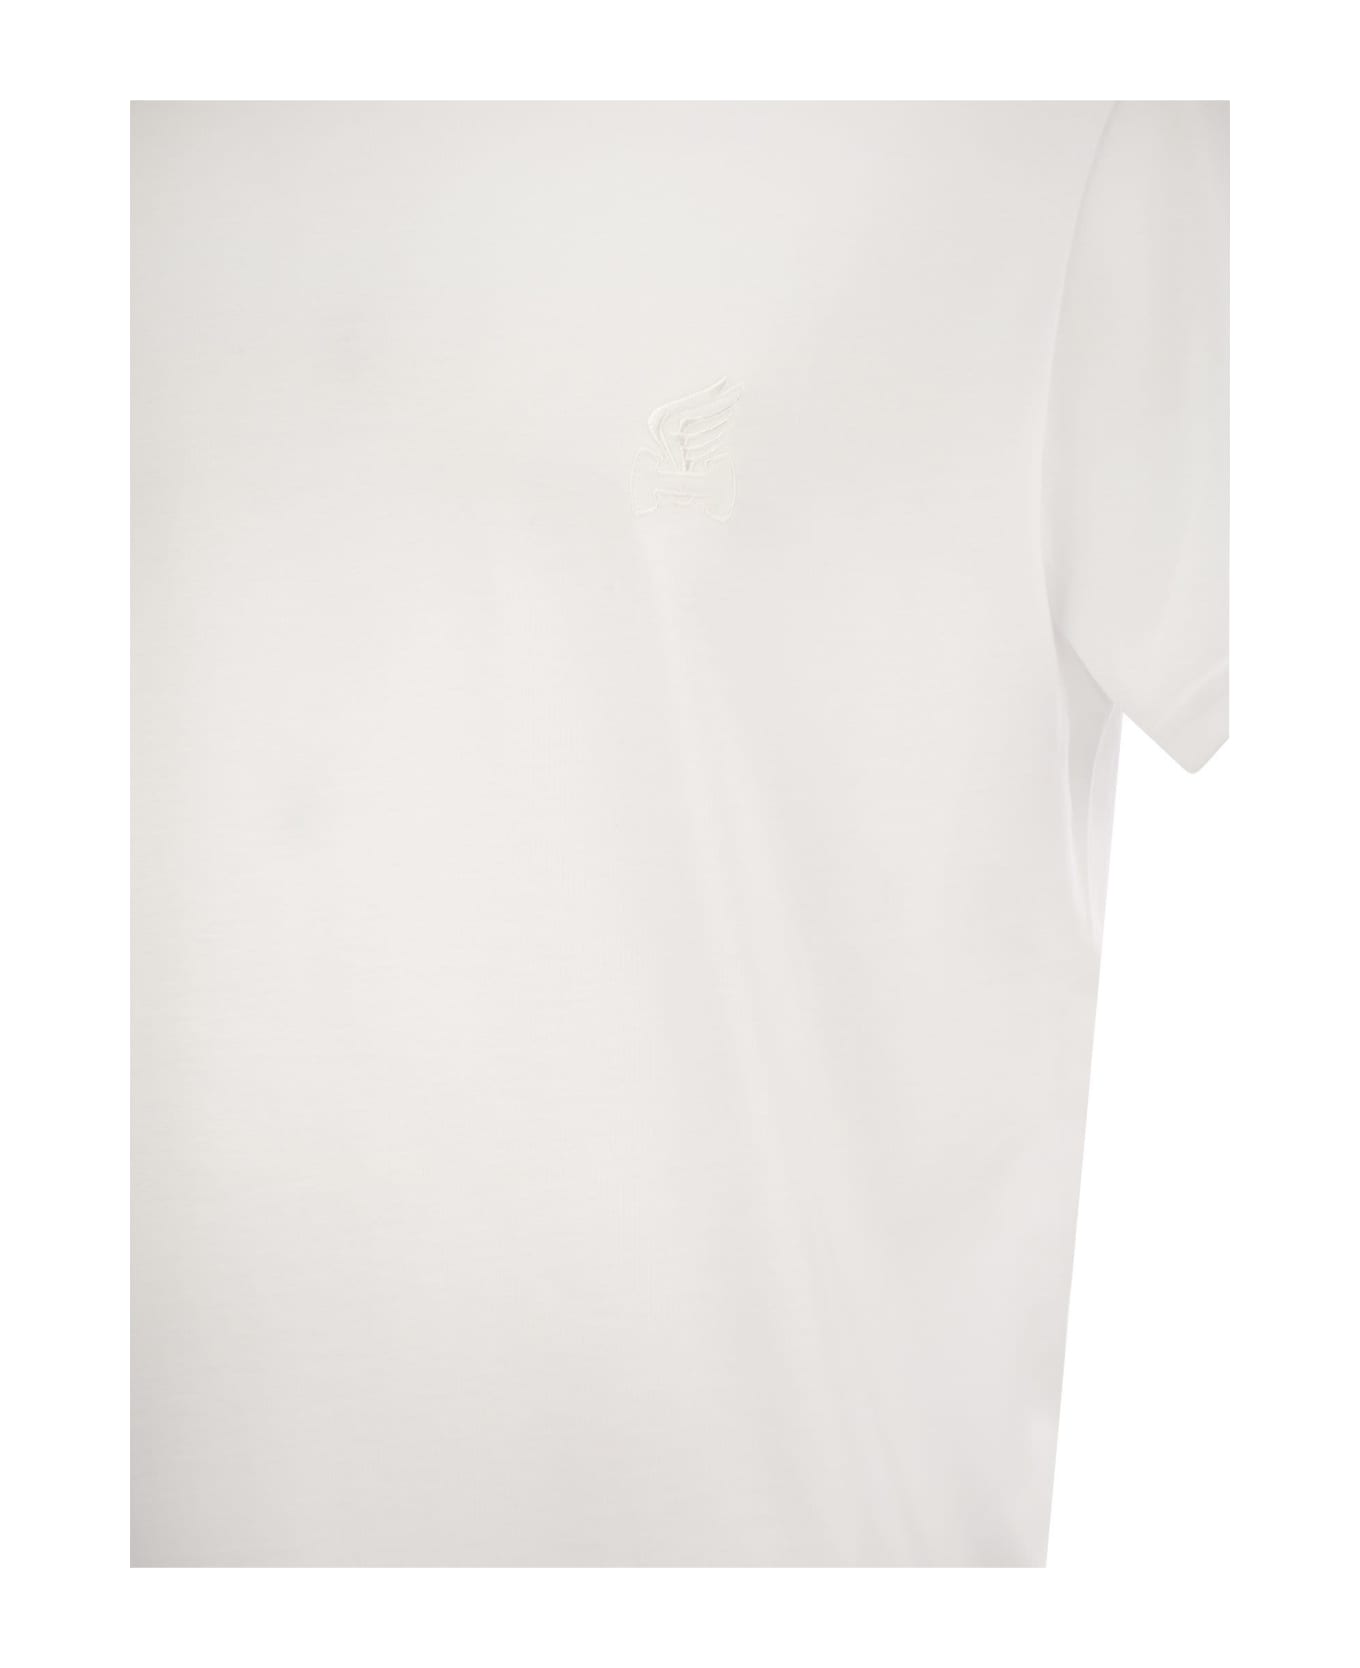 Hogan Crewneck Short-sleeve T-shirt - White Tシャツ